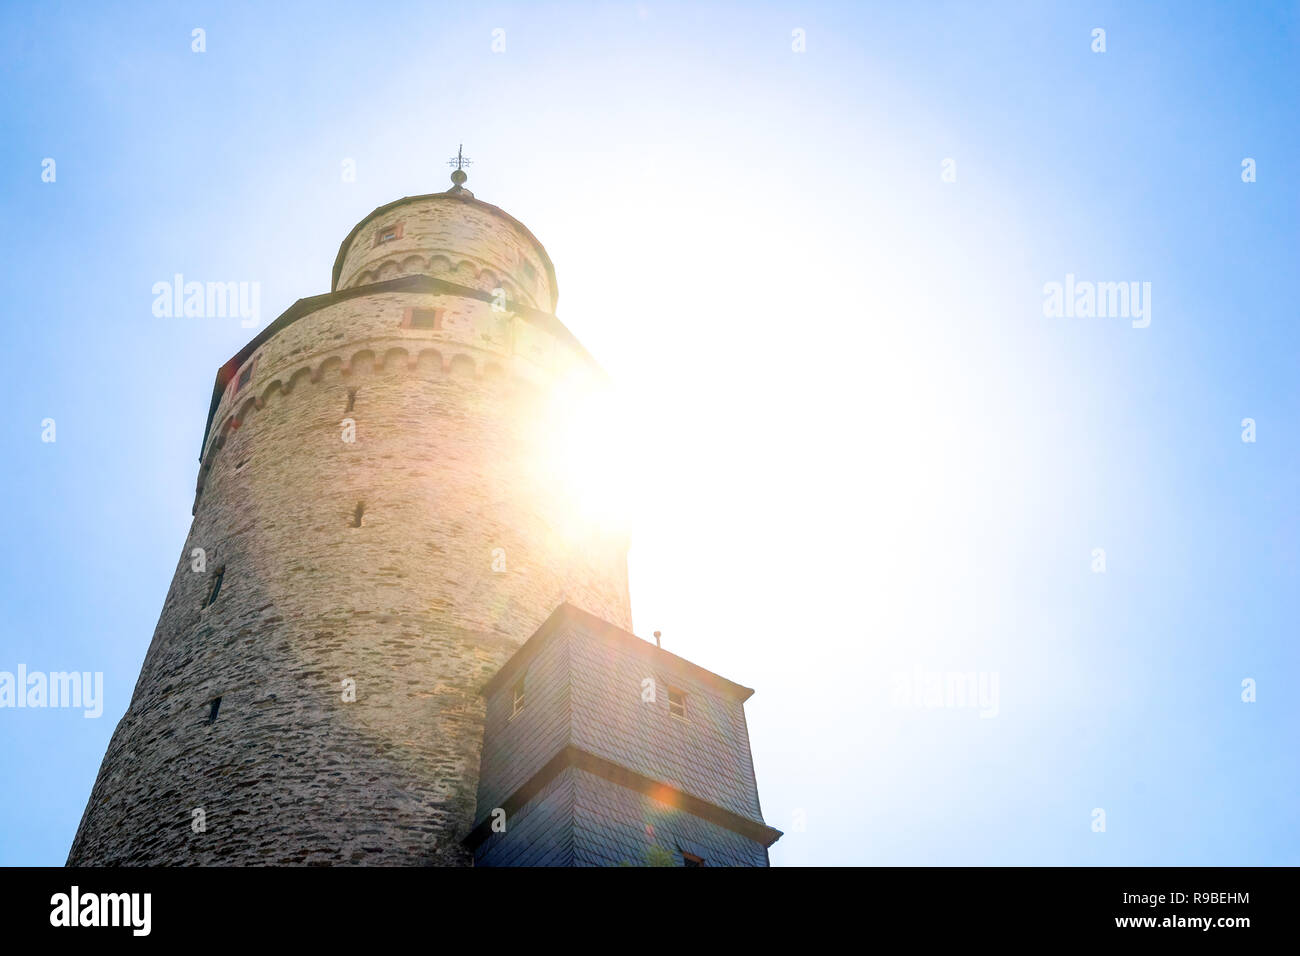 Witch Tower, Idstein, Germany Stock Photo